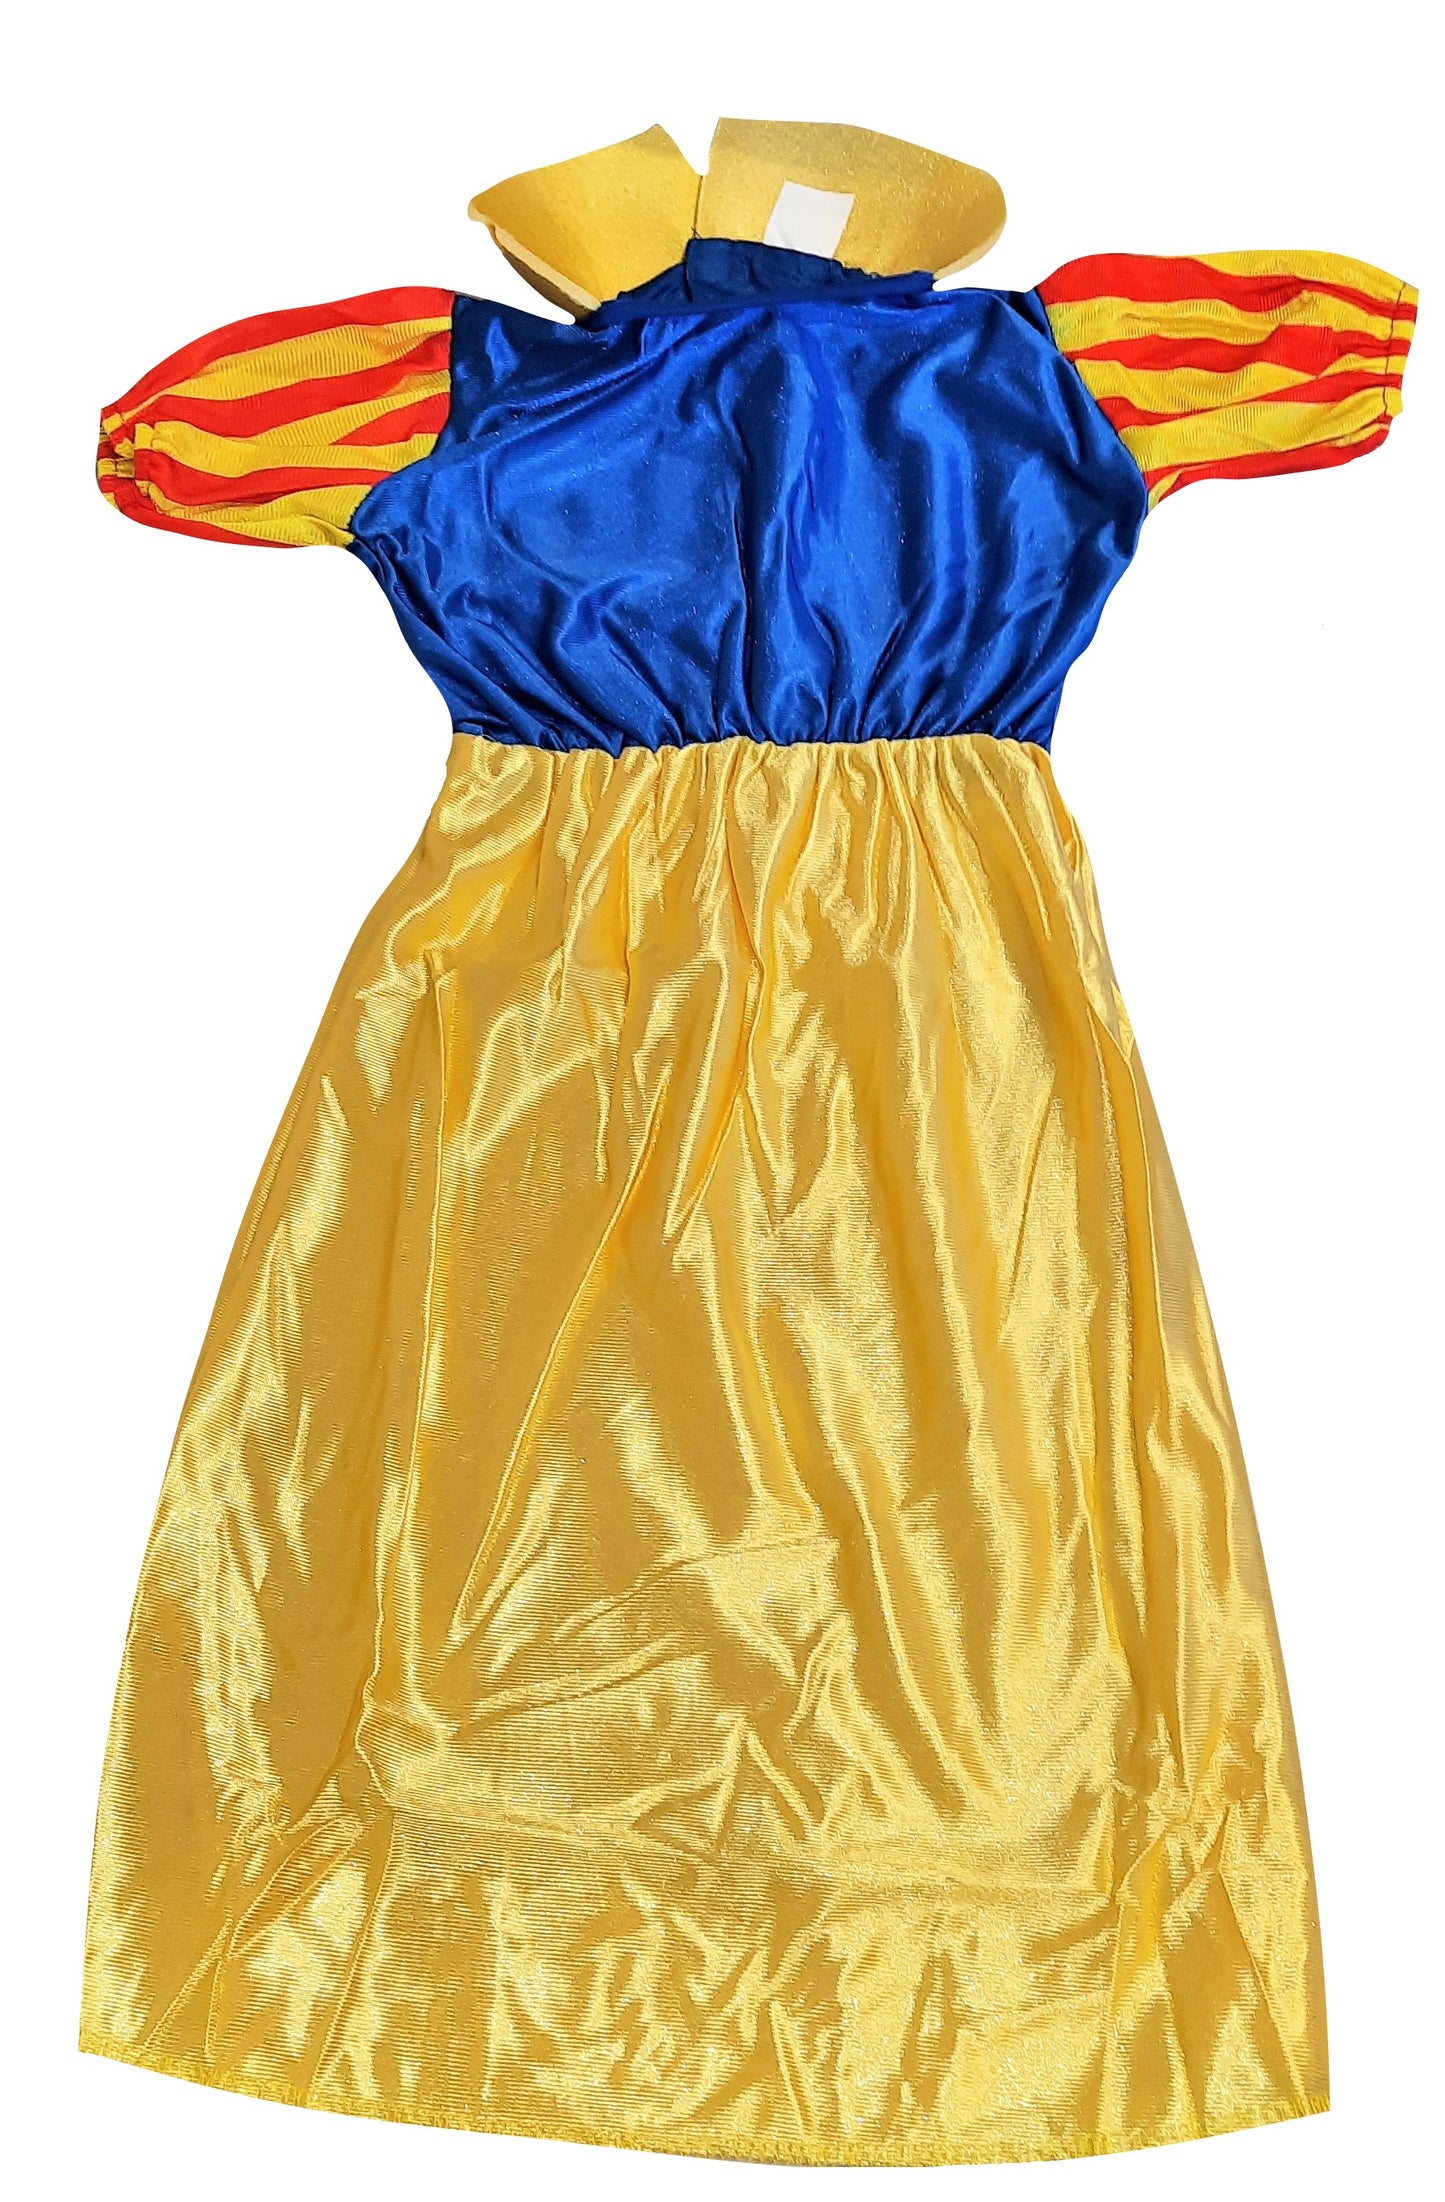 Girls Princess Storybook Fancy Dress Costume Age 2-4